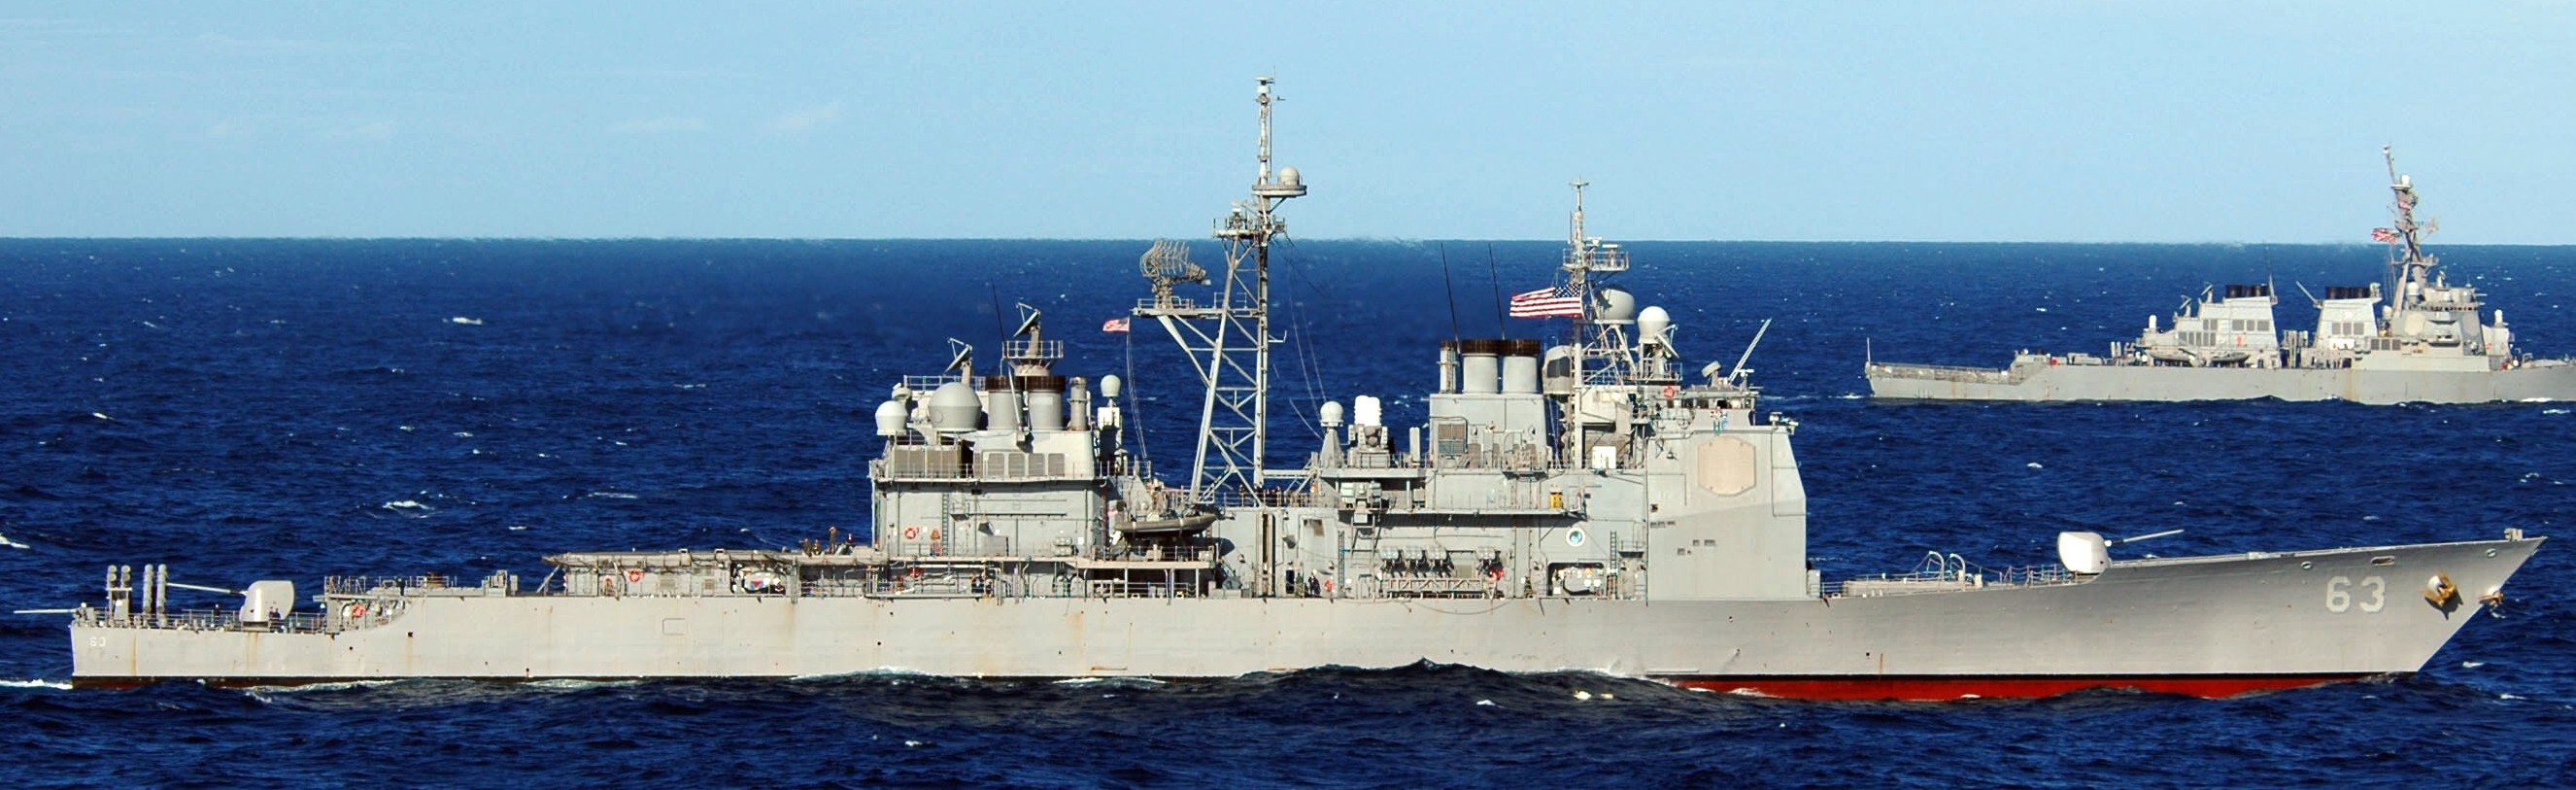 cg-63 uss cowpens ticonderoga class guided missile cruiser aegis us navy coral sea 18